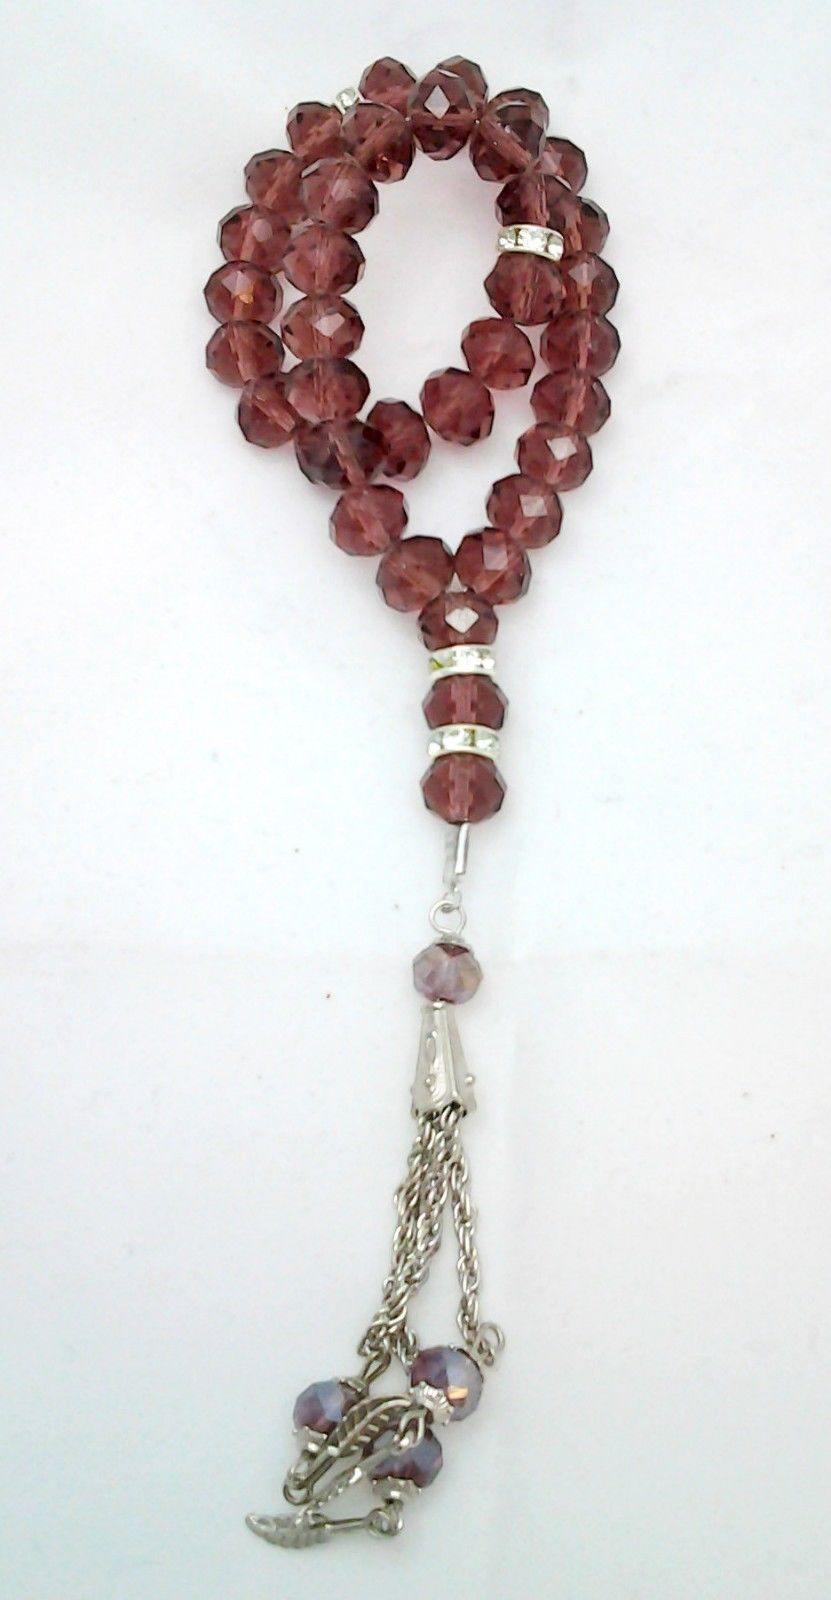 Salah 10mm Shiny Colorful Crystal Prayer Beads 33 Mesbaha - Arabian Shopping Zone